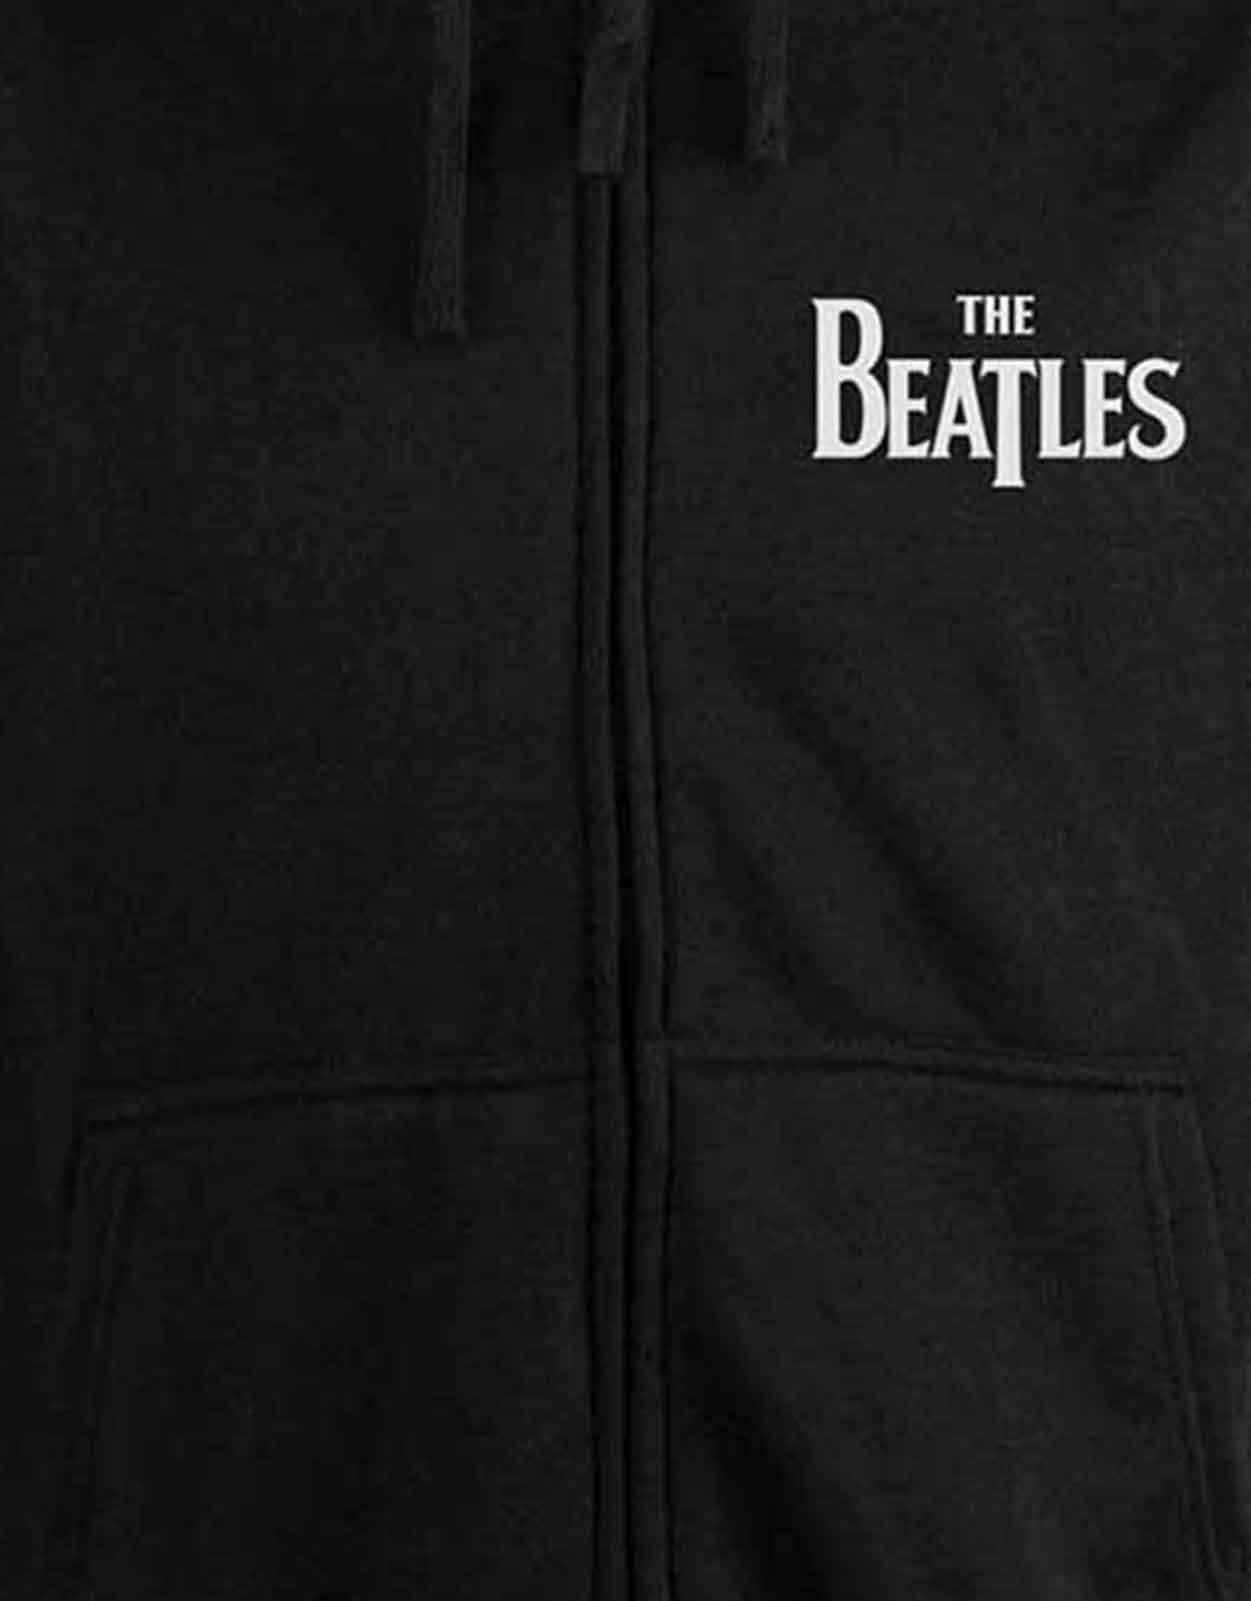 The Beatles Drop T Logo Zipped Hoodie